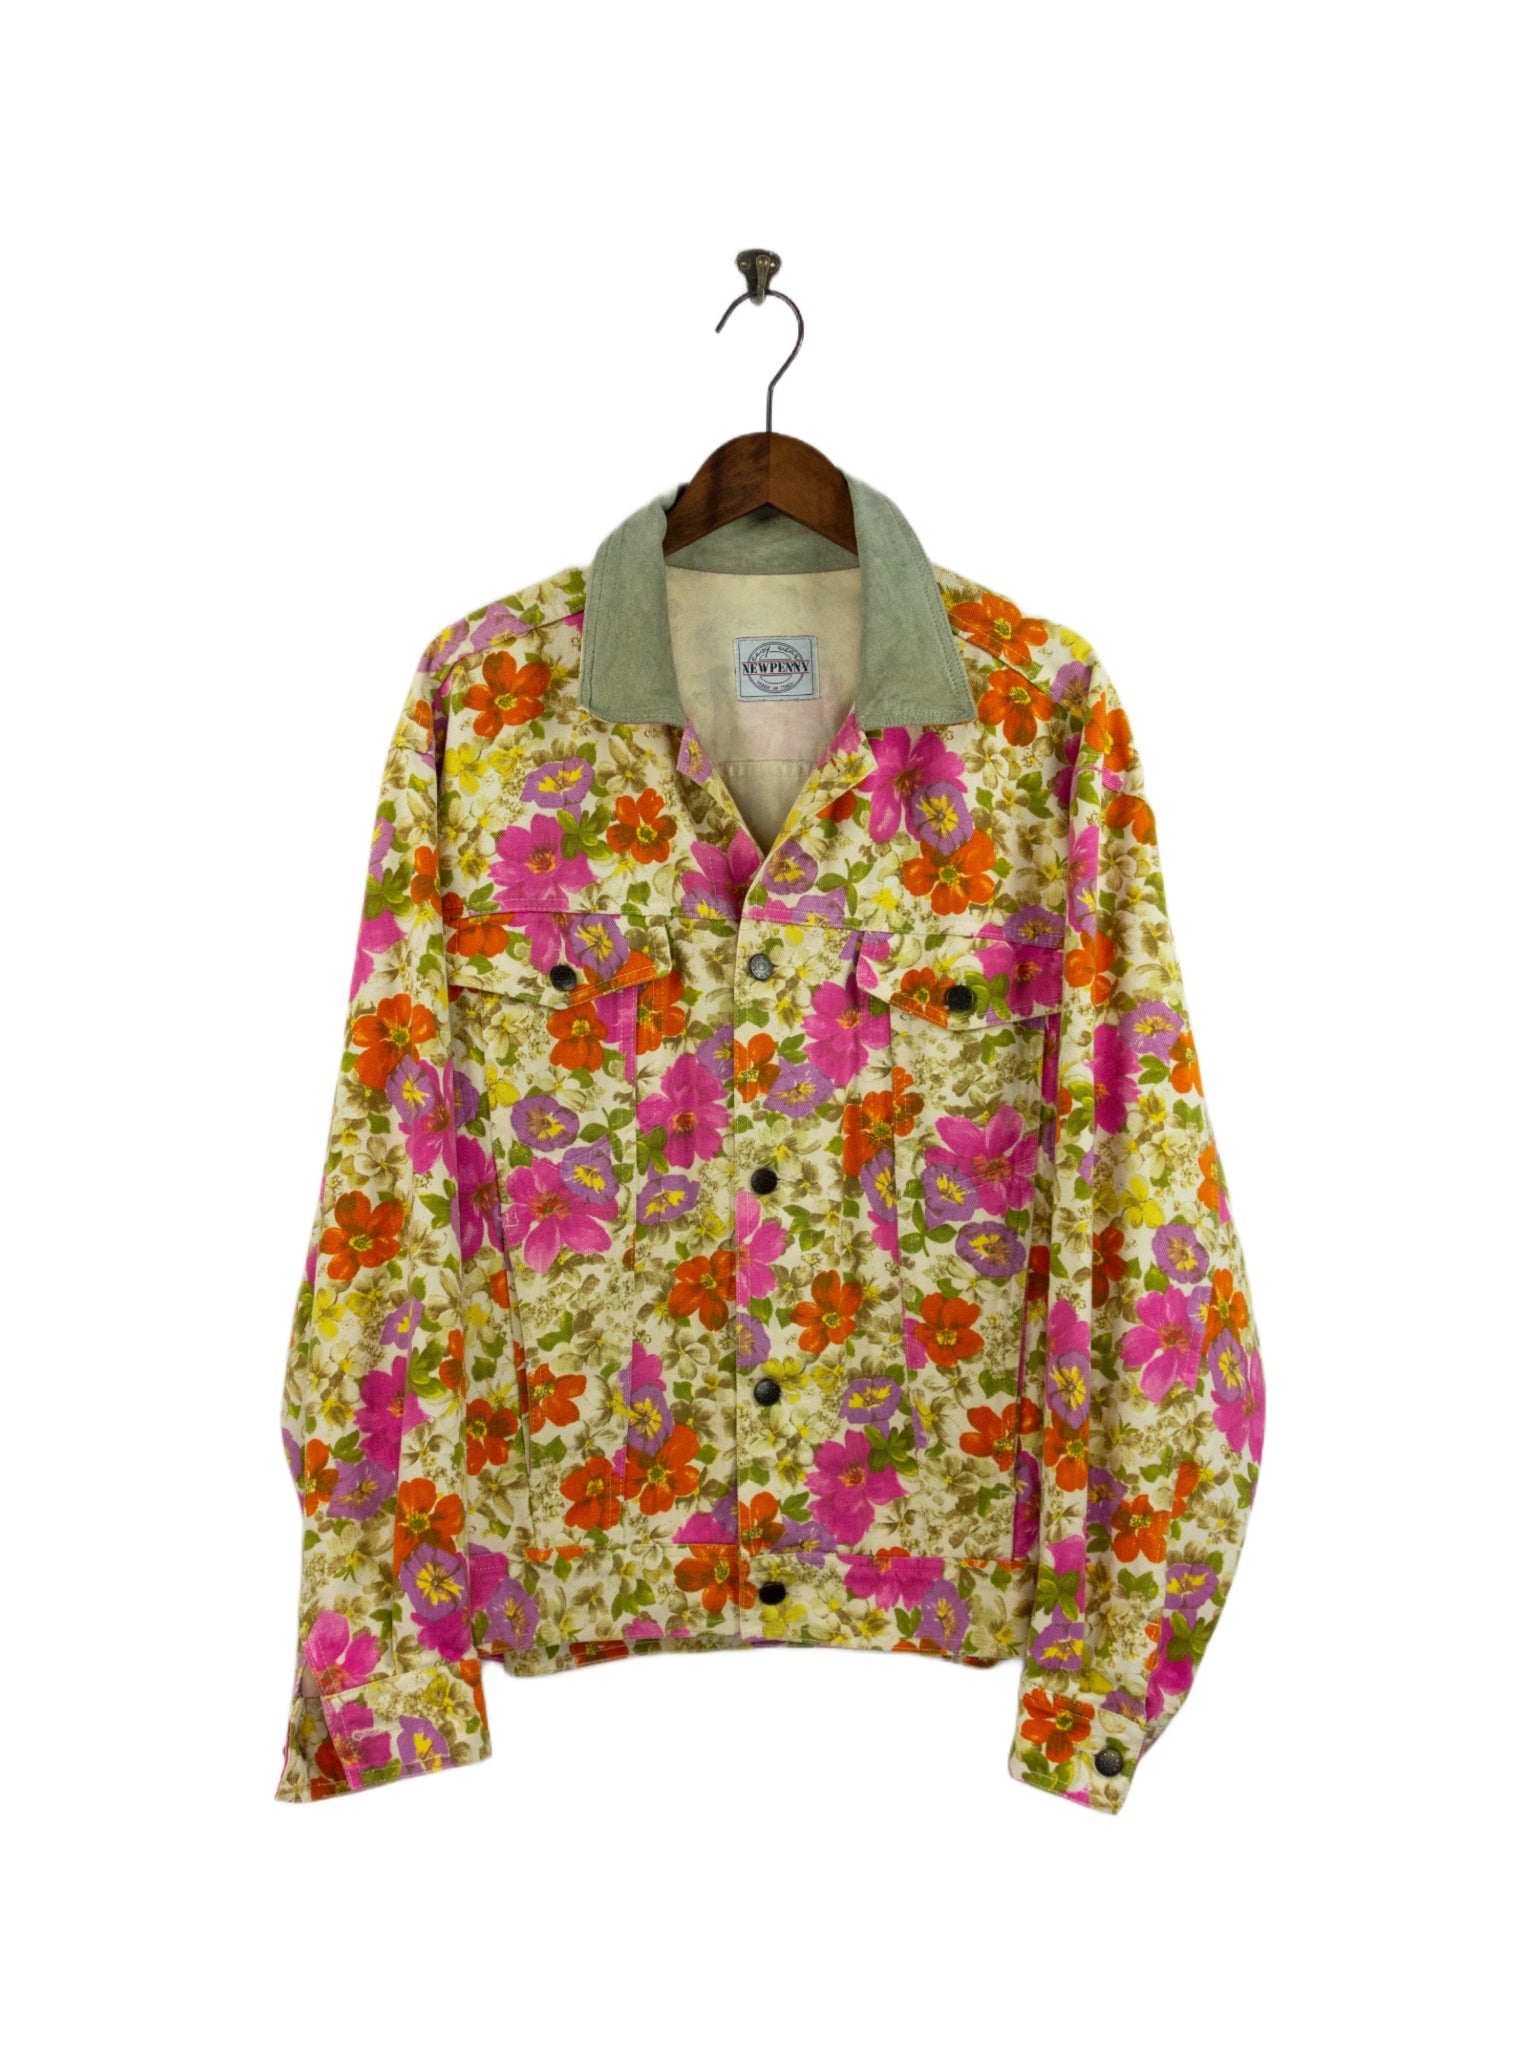 Denim jacket with a floral pattern L/XL